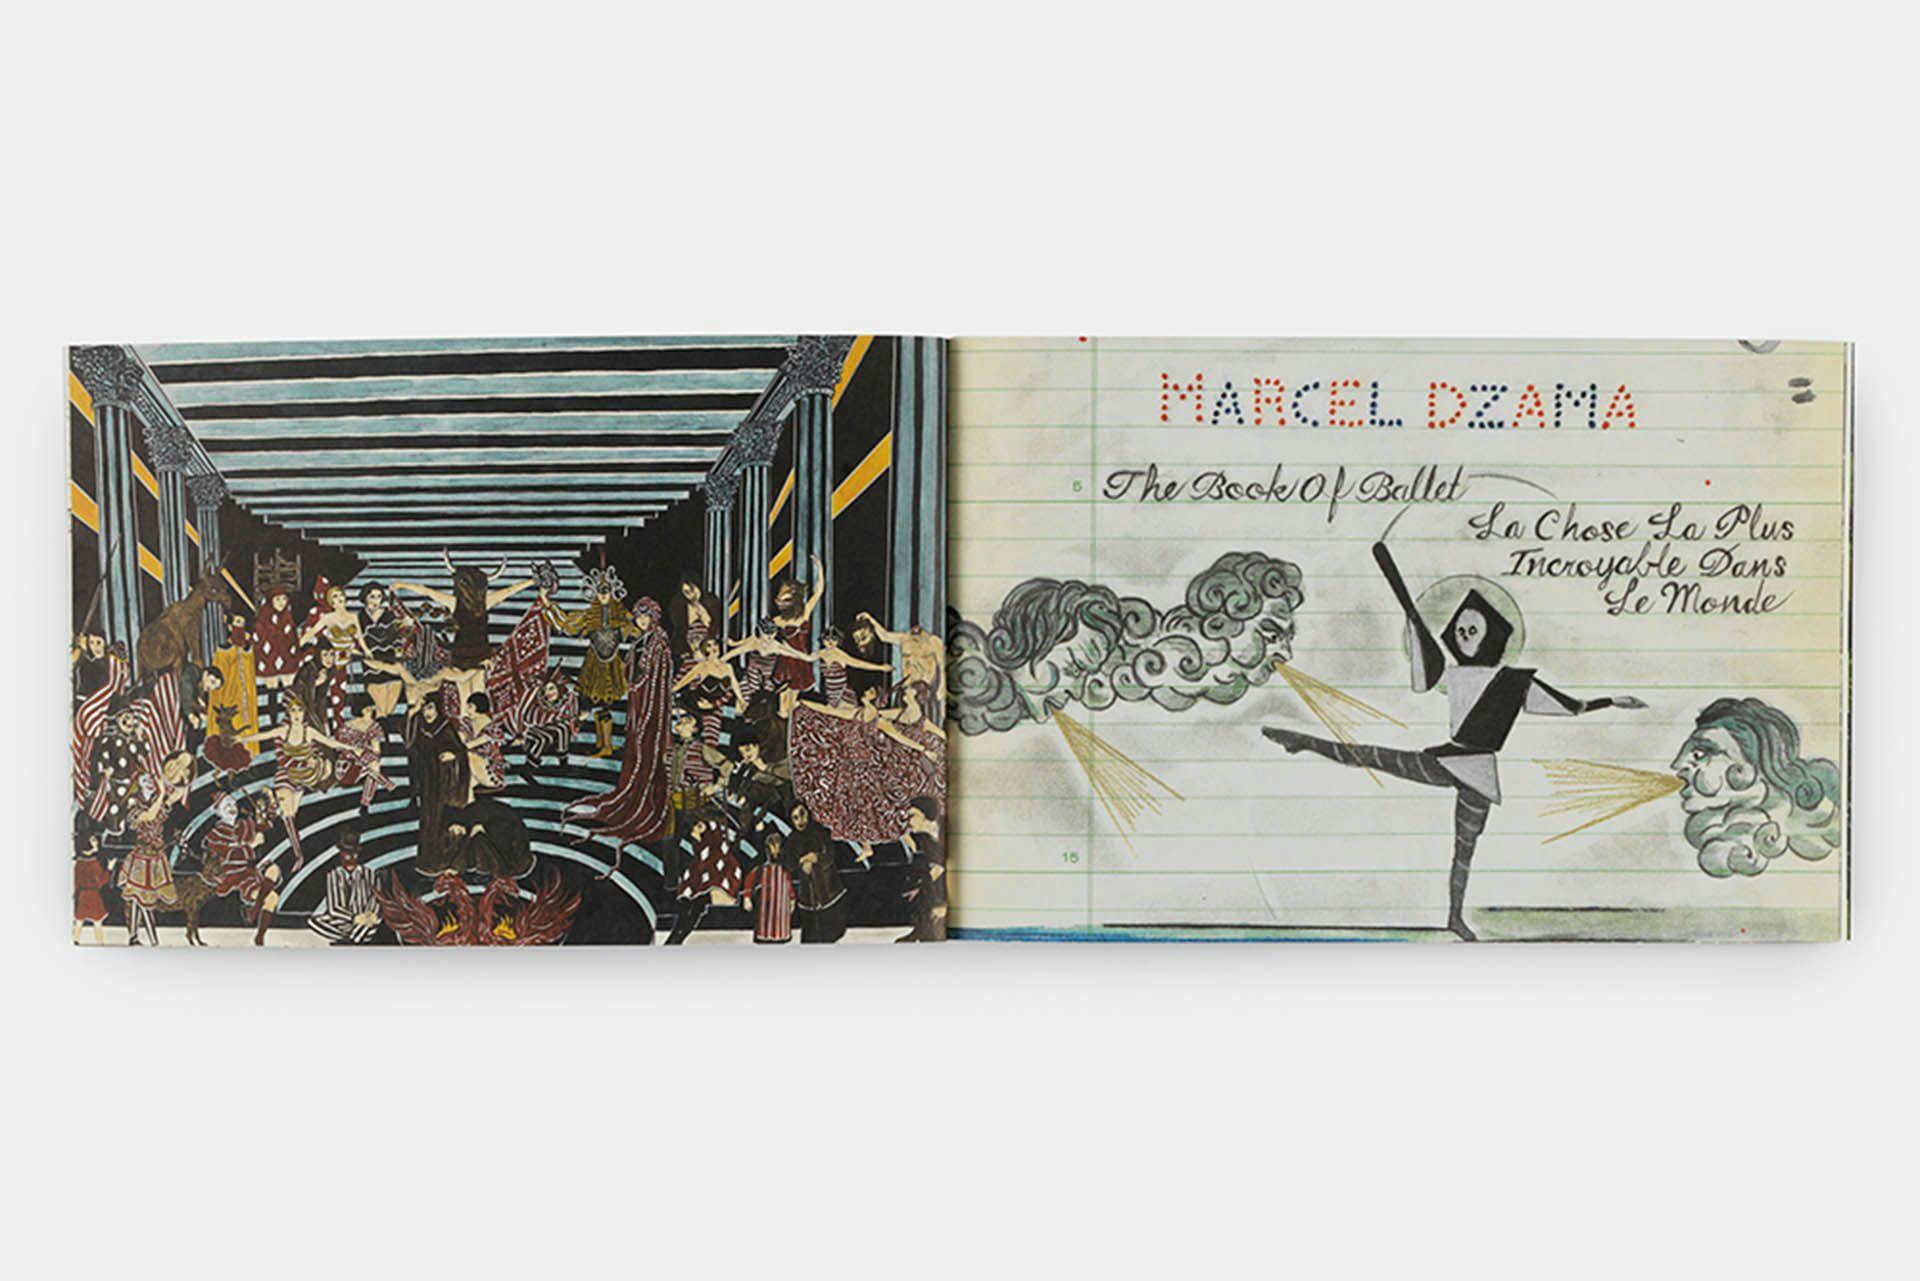 A photograph of Marcel Dzama's Book of Ballet.